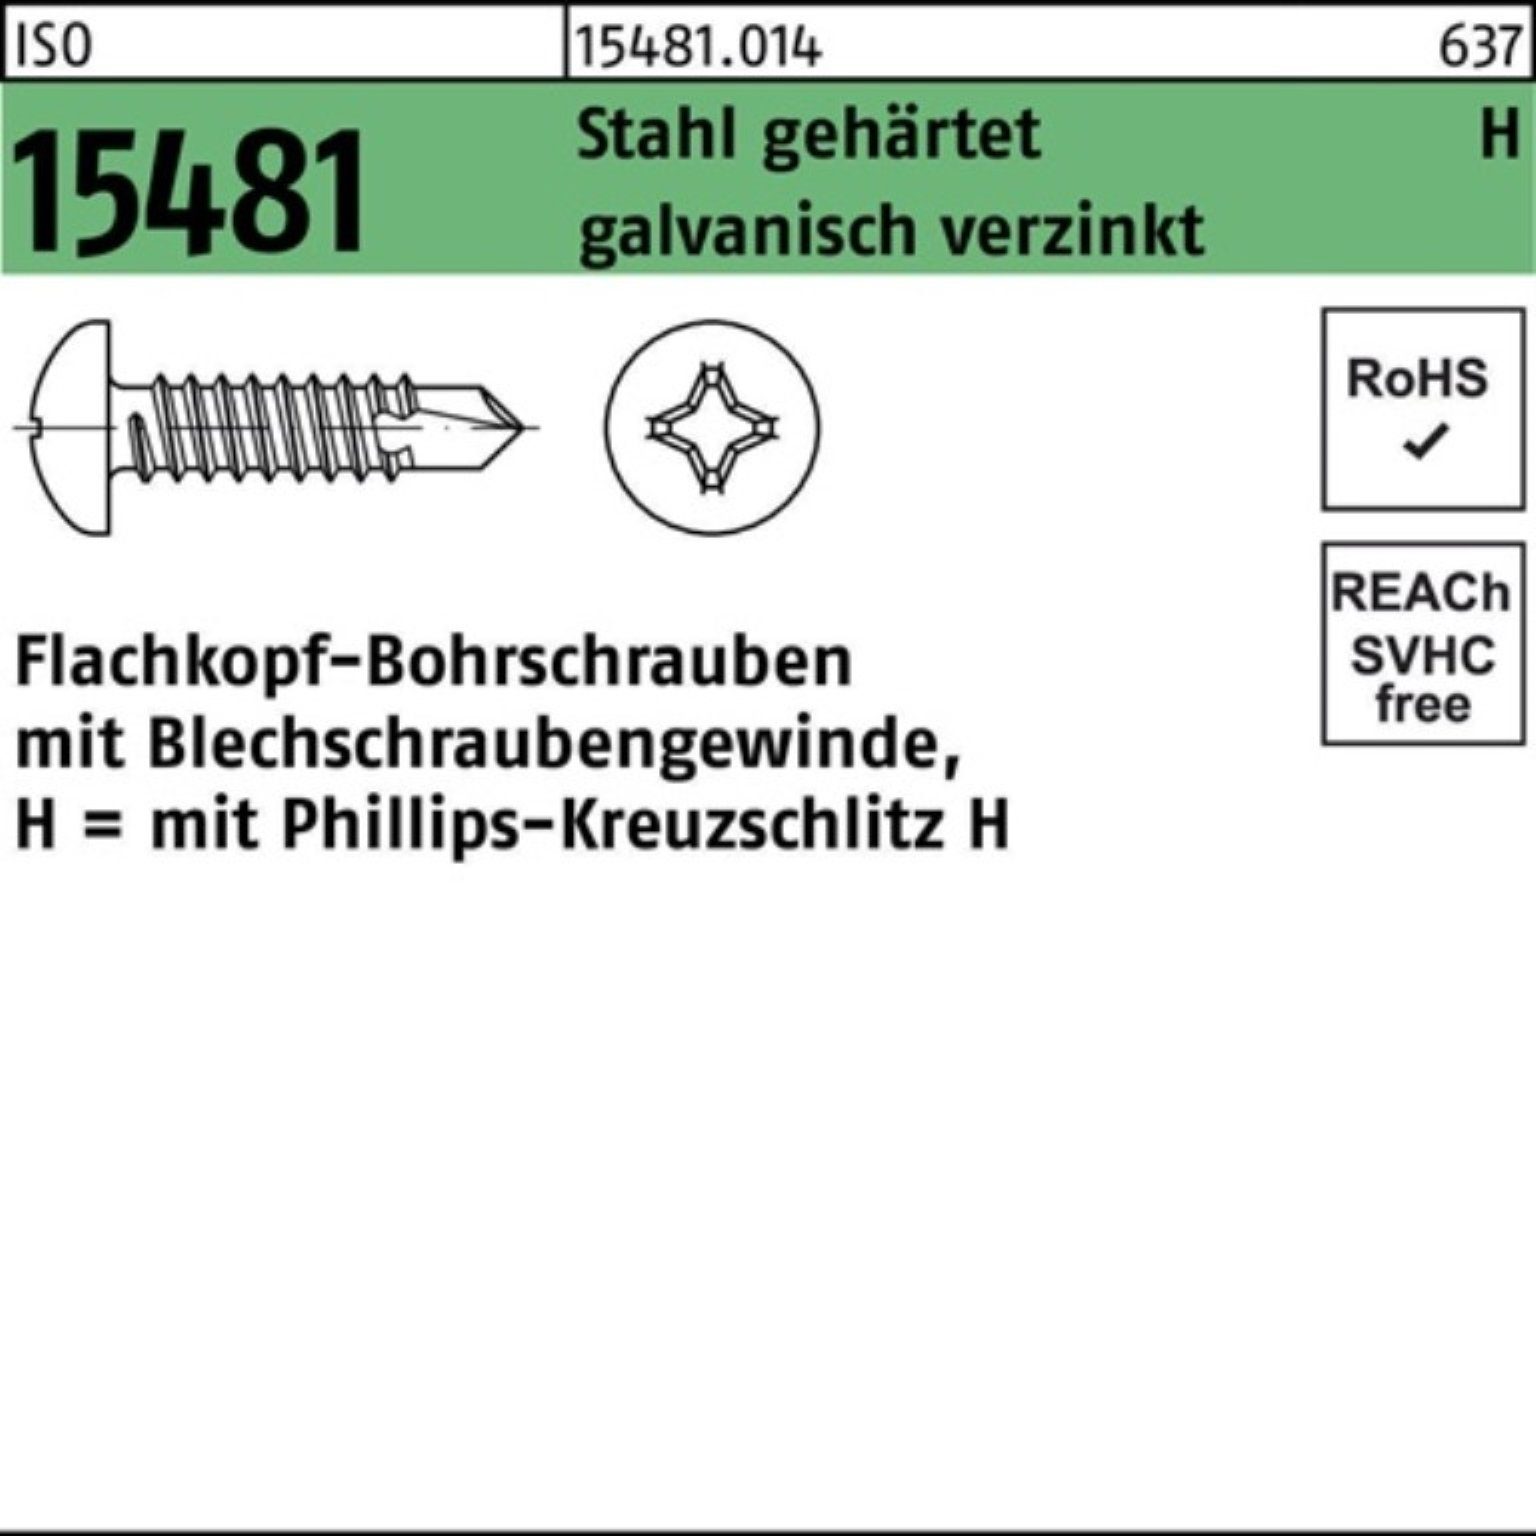 Reyher Bohrschraube 4,8x110-H FLAKObohrschraube ST Stahl PH 15481 100er Pack ISO gehärtet